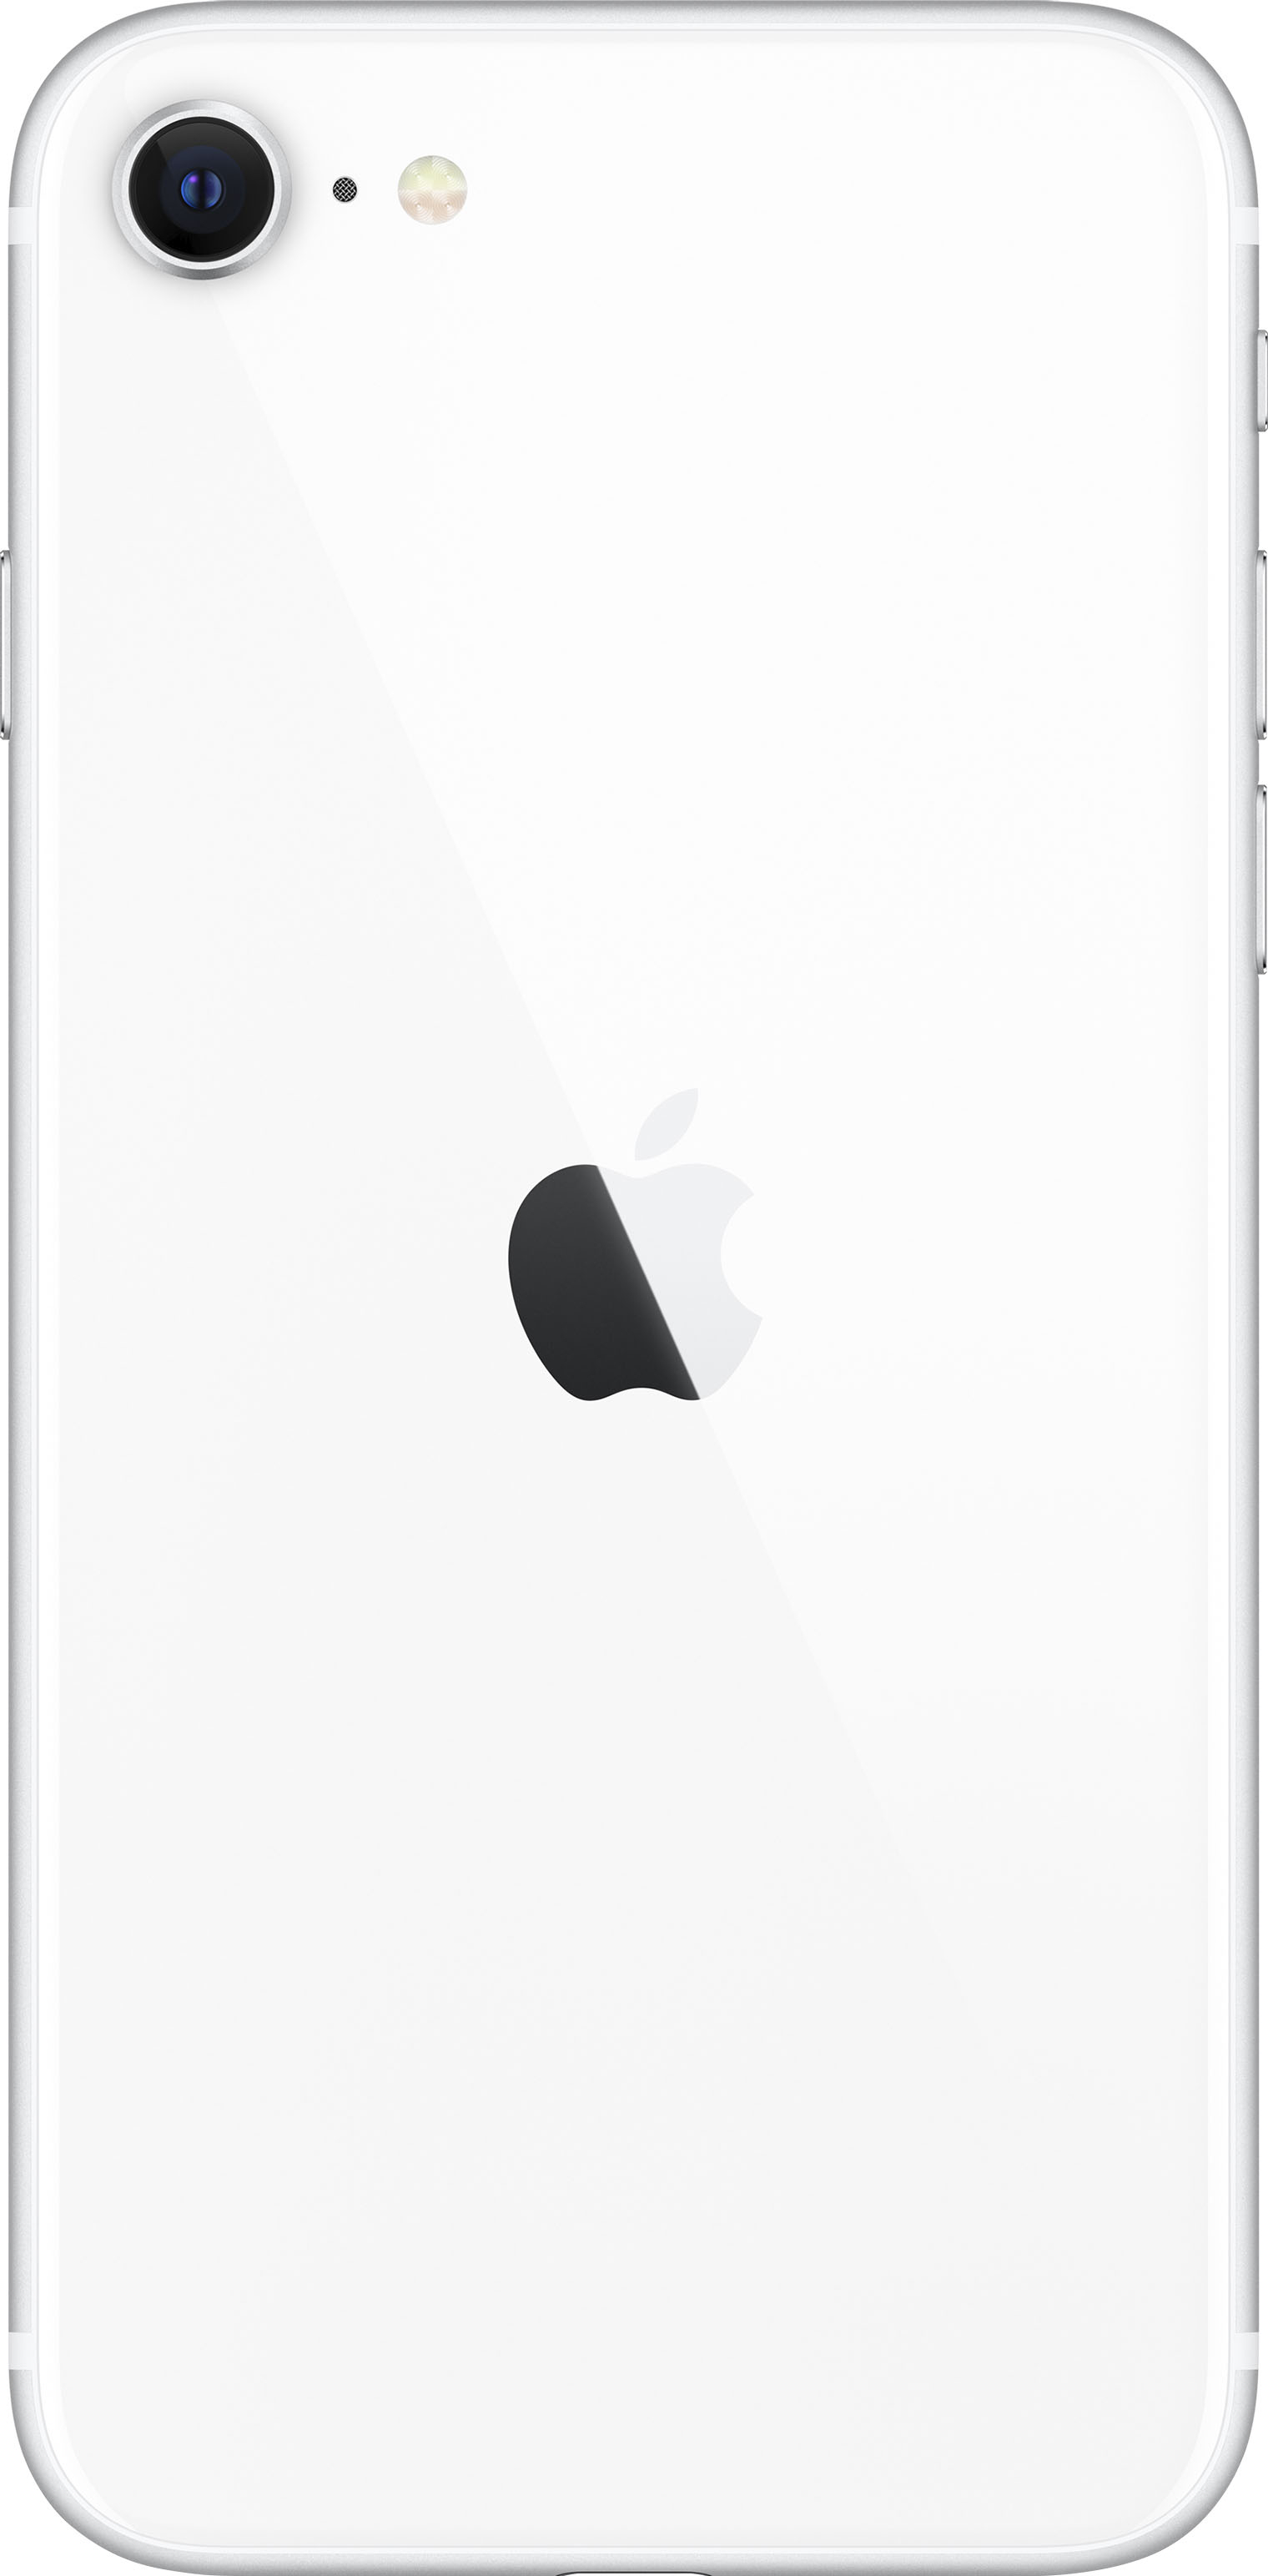 Back View: Walmart Family Mobile Apple iPhone XR, 64GB, Black- Prepaid Smartphone